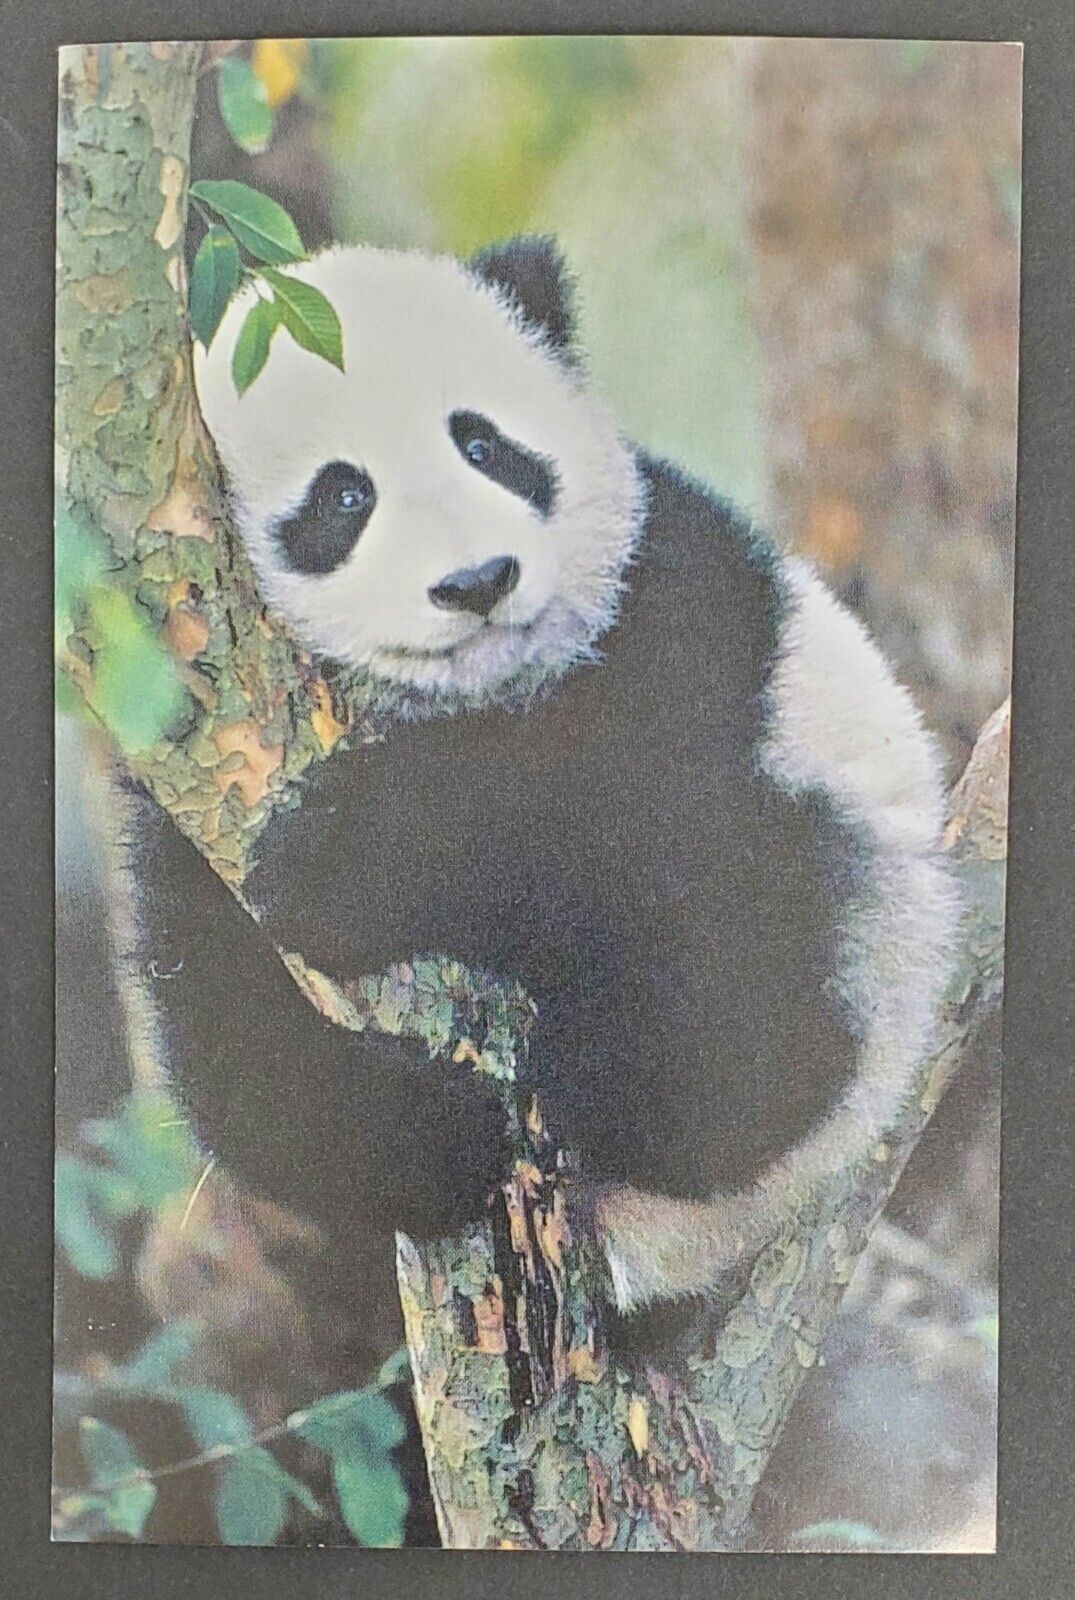 Zoological Society of San Diego Panda San Diego Zoo Wild Animal Park Postcard